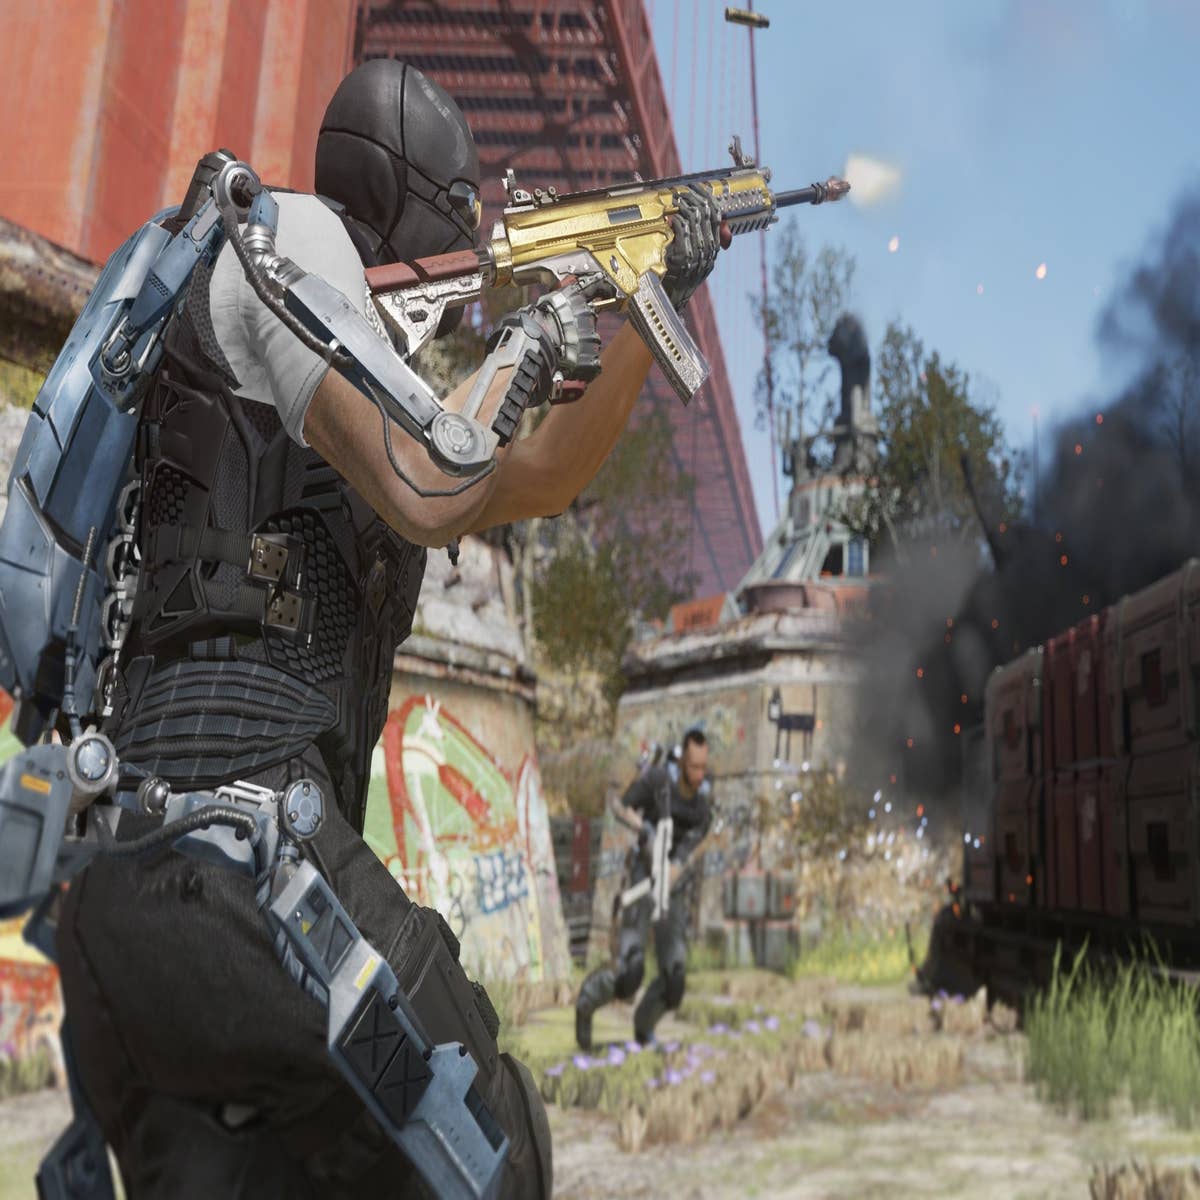 Call of Duty: Advanced Warfare multiplayer guide - Exo basics